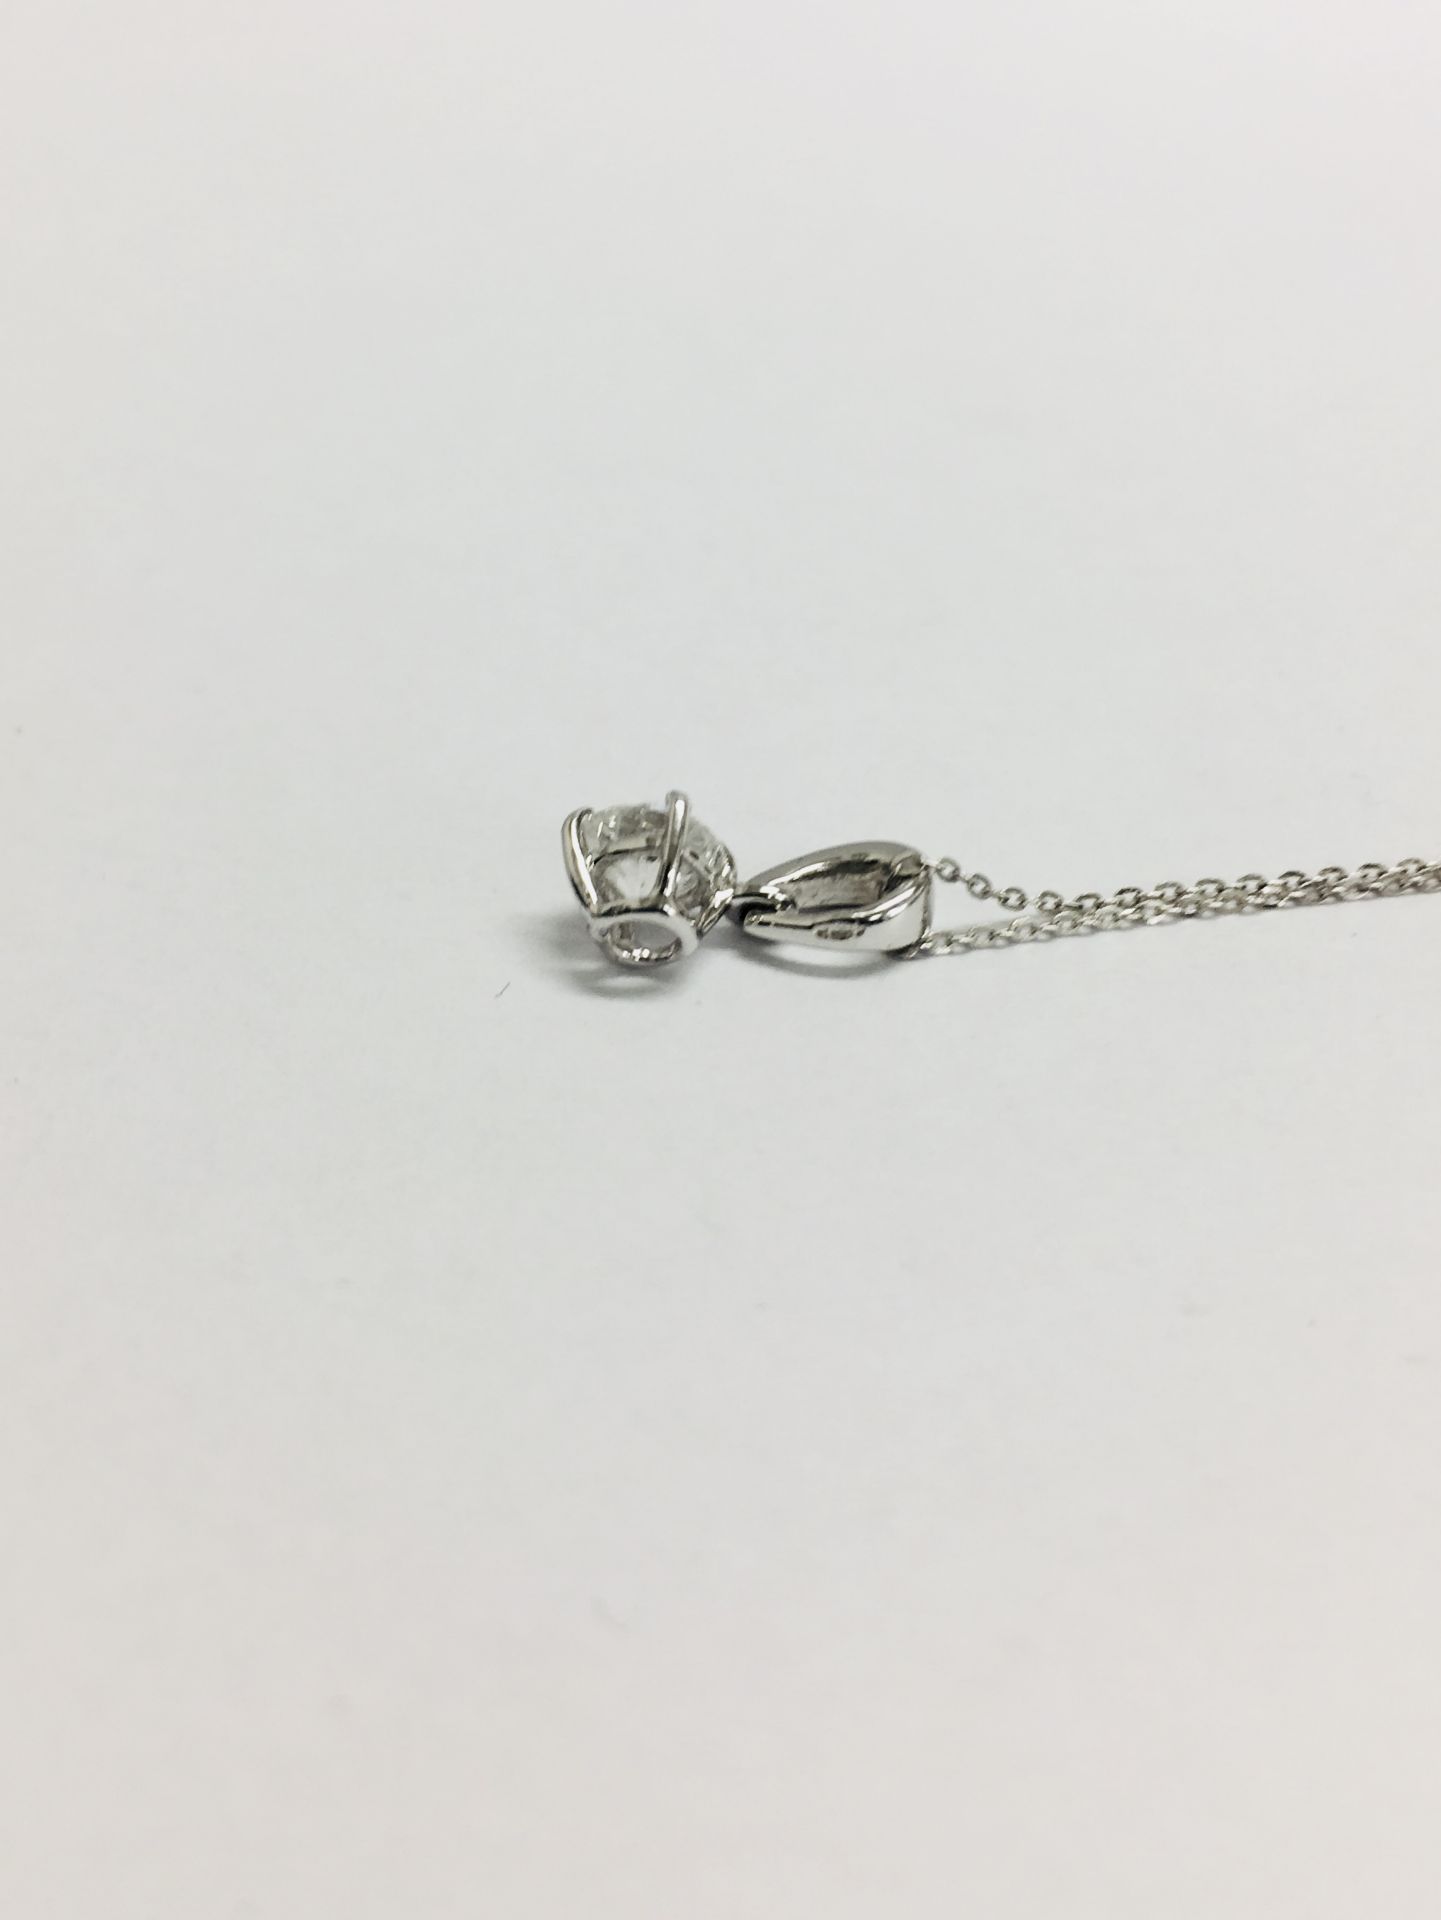 8ct white gold diamond pendant,0.33ct brilliant cut diamond h colour i1 clarity,diamond set mount